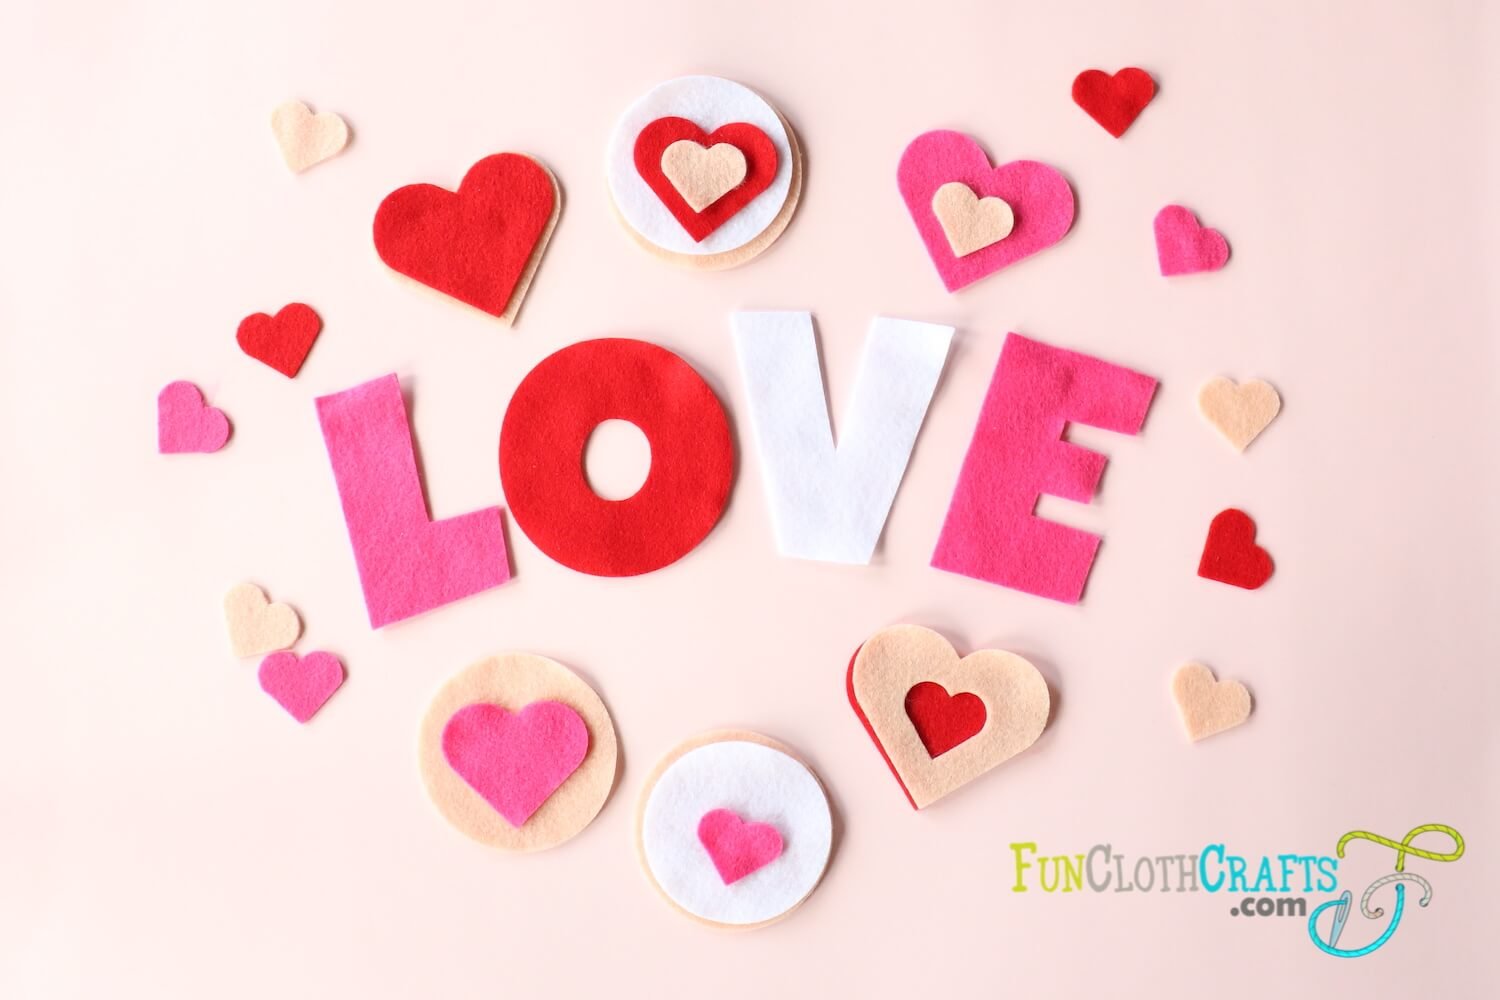 Make a Little Love this Valentine's Day